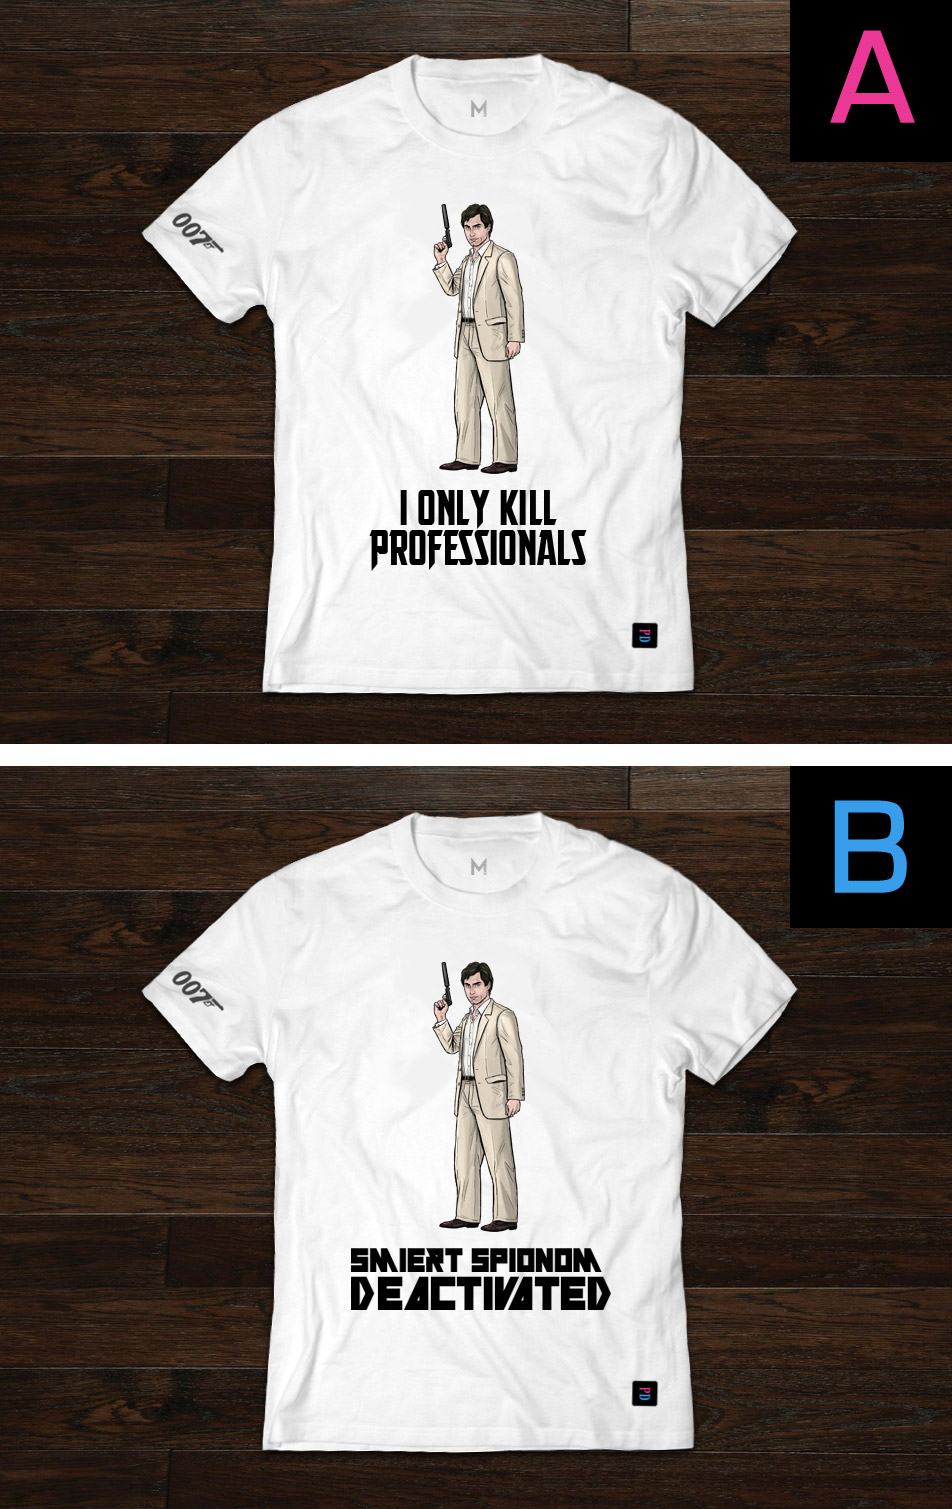 Enigmatic & Dangerous PD T-Shirt designs by Marten Go aka MGO